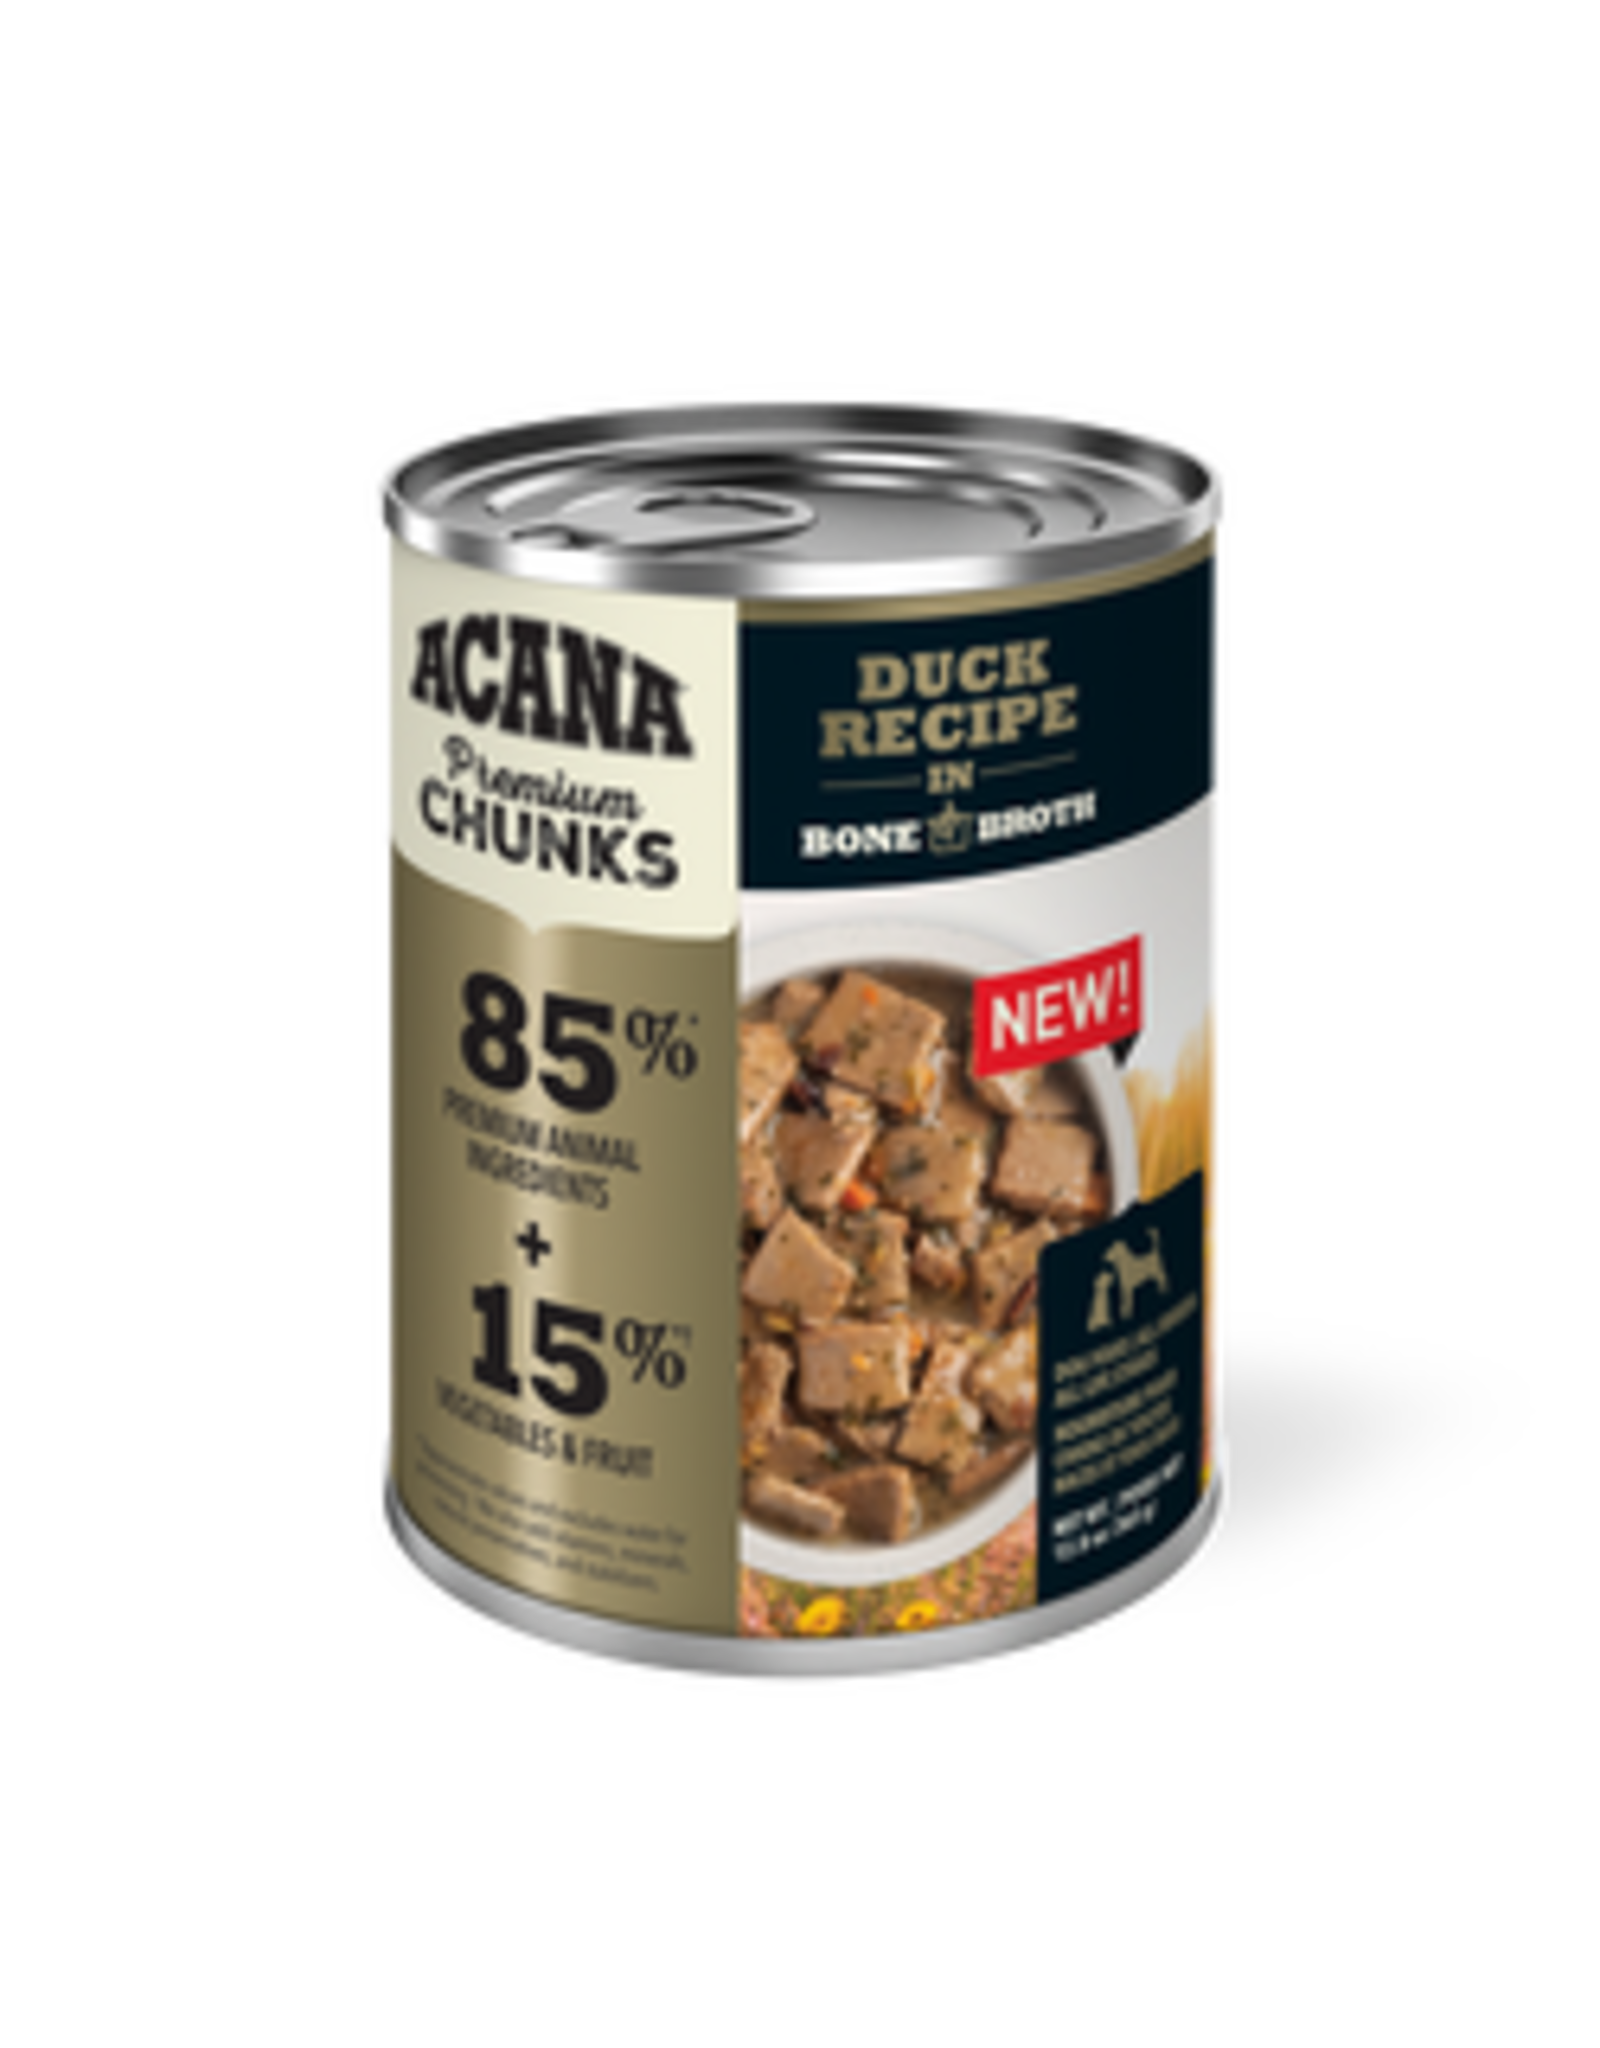 Acana Premium Chunks Duck Recipe in Bone Broth 363g